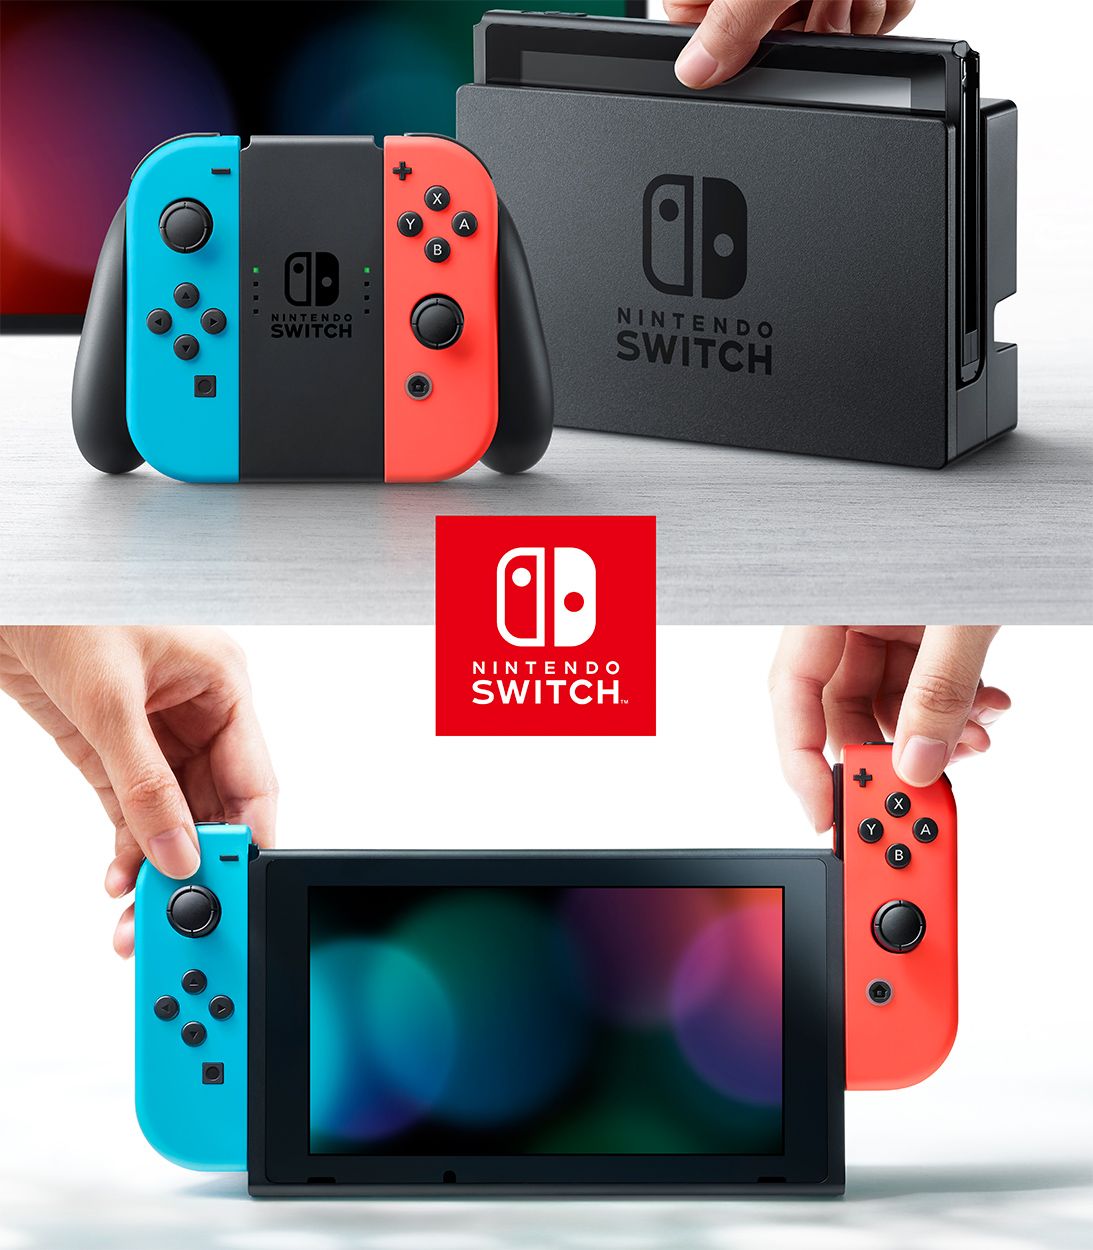 TLDR Nintendo Switch